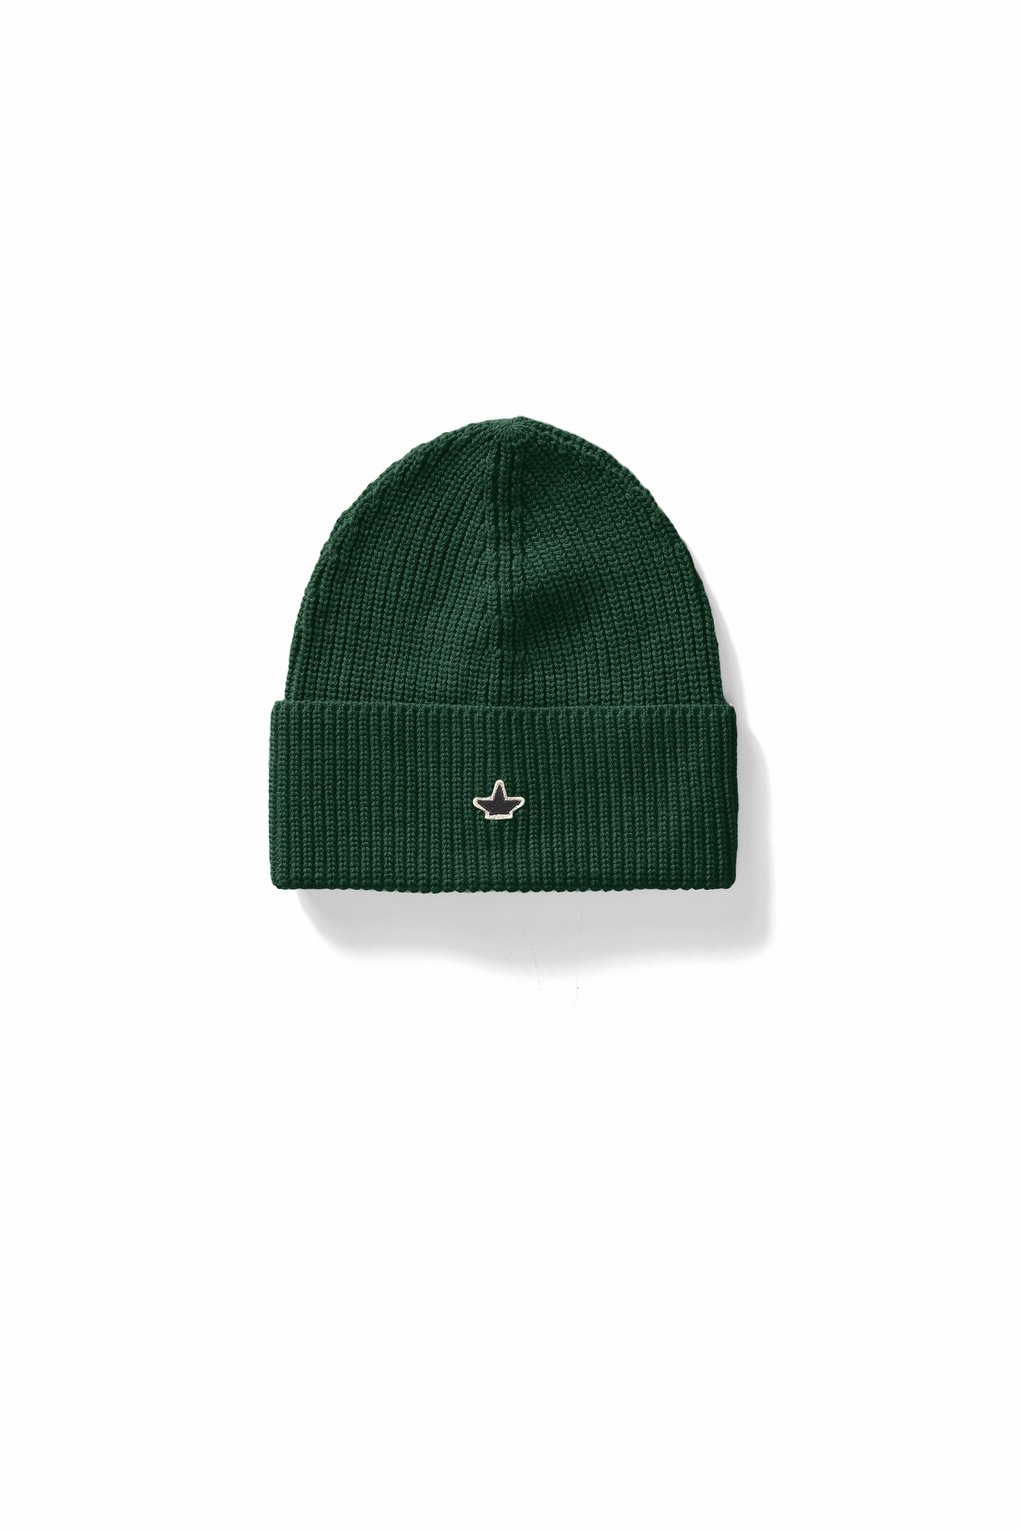 Men's hat - LM2087TCUFF - Army Green